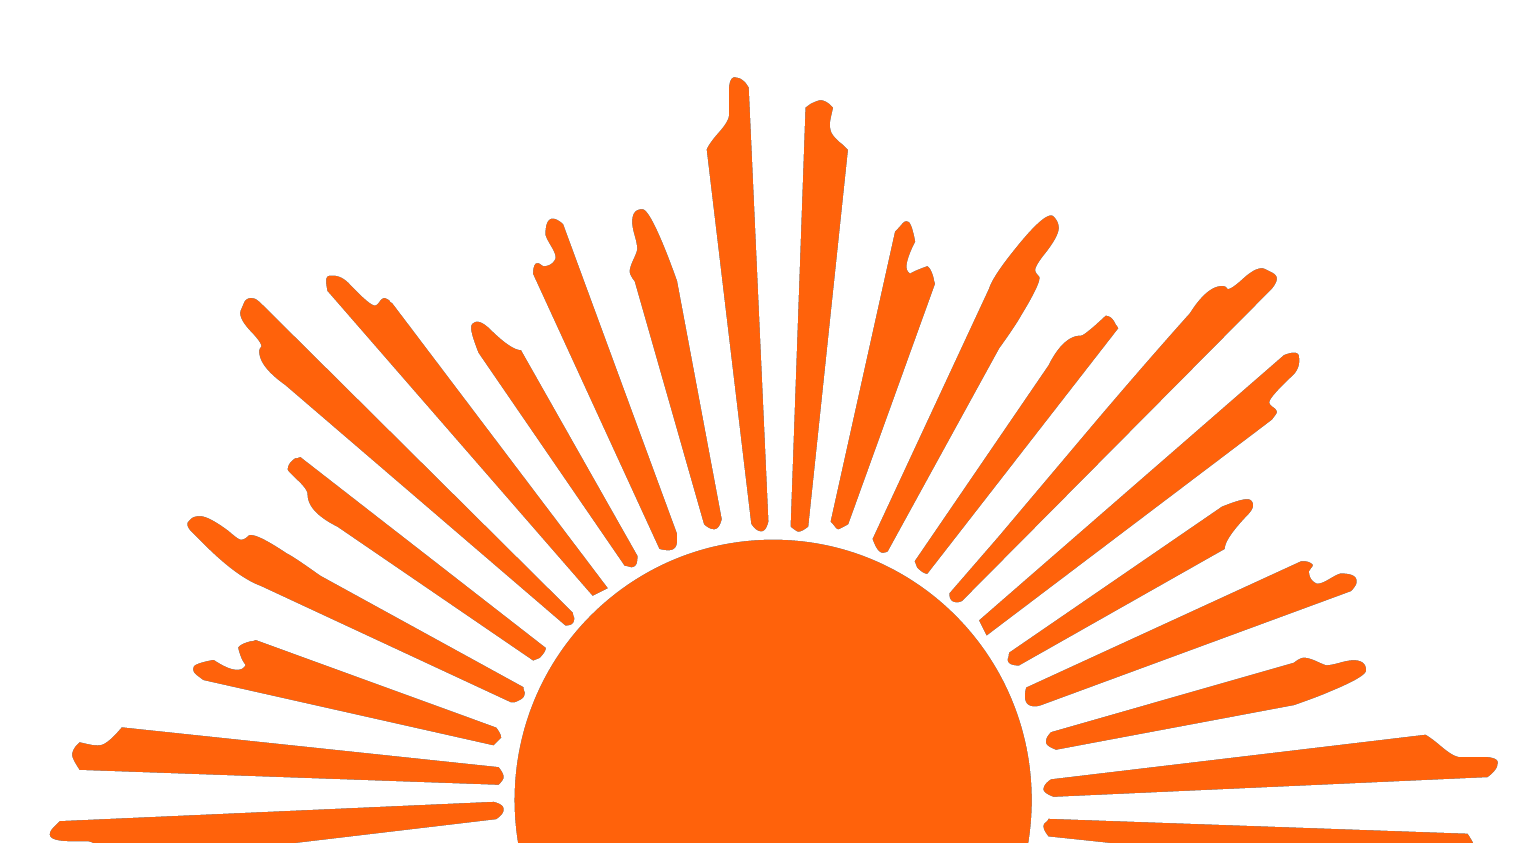 Free Sun Logo Images, Download Free Sun Logo Images png images, Free ...